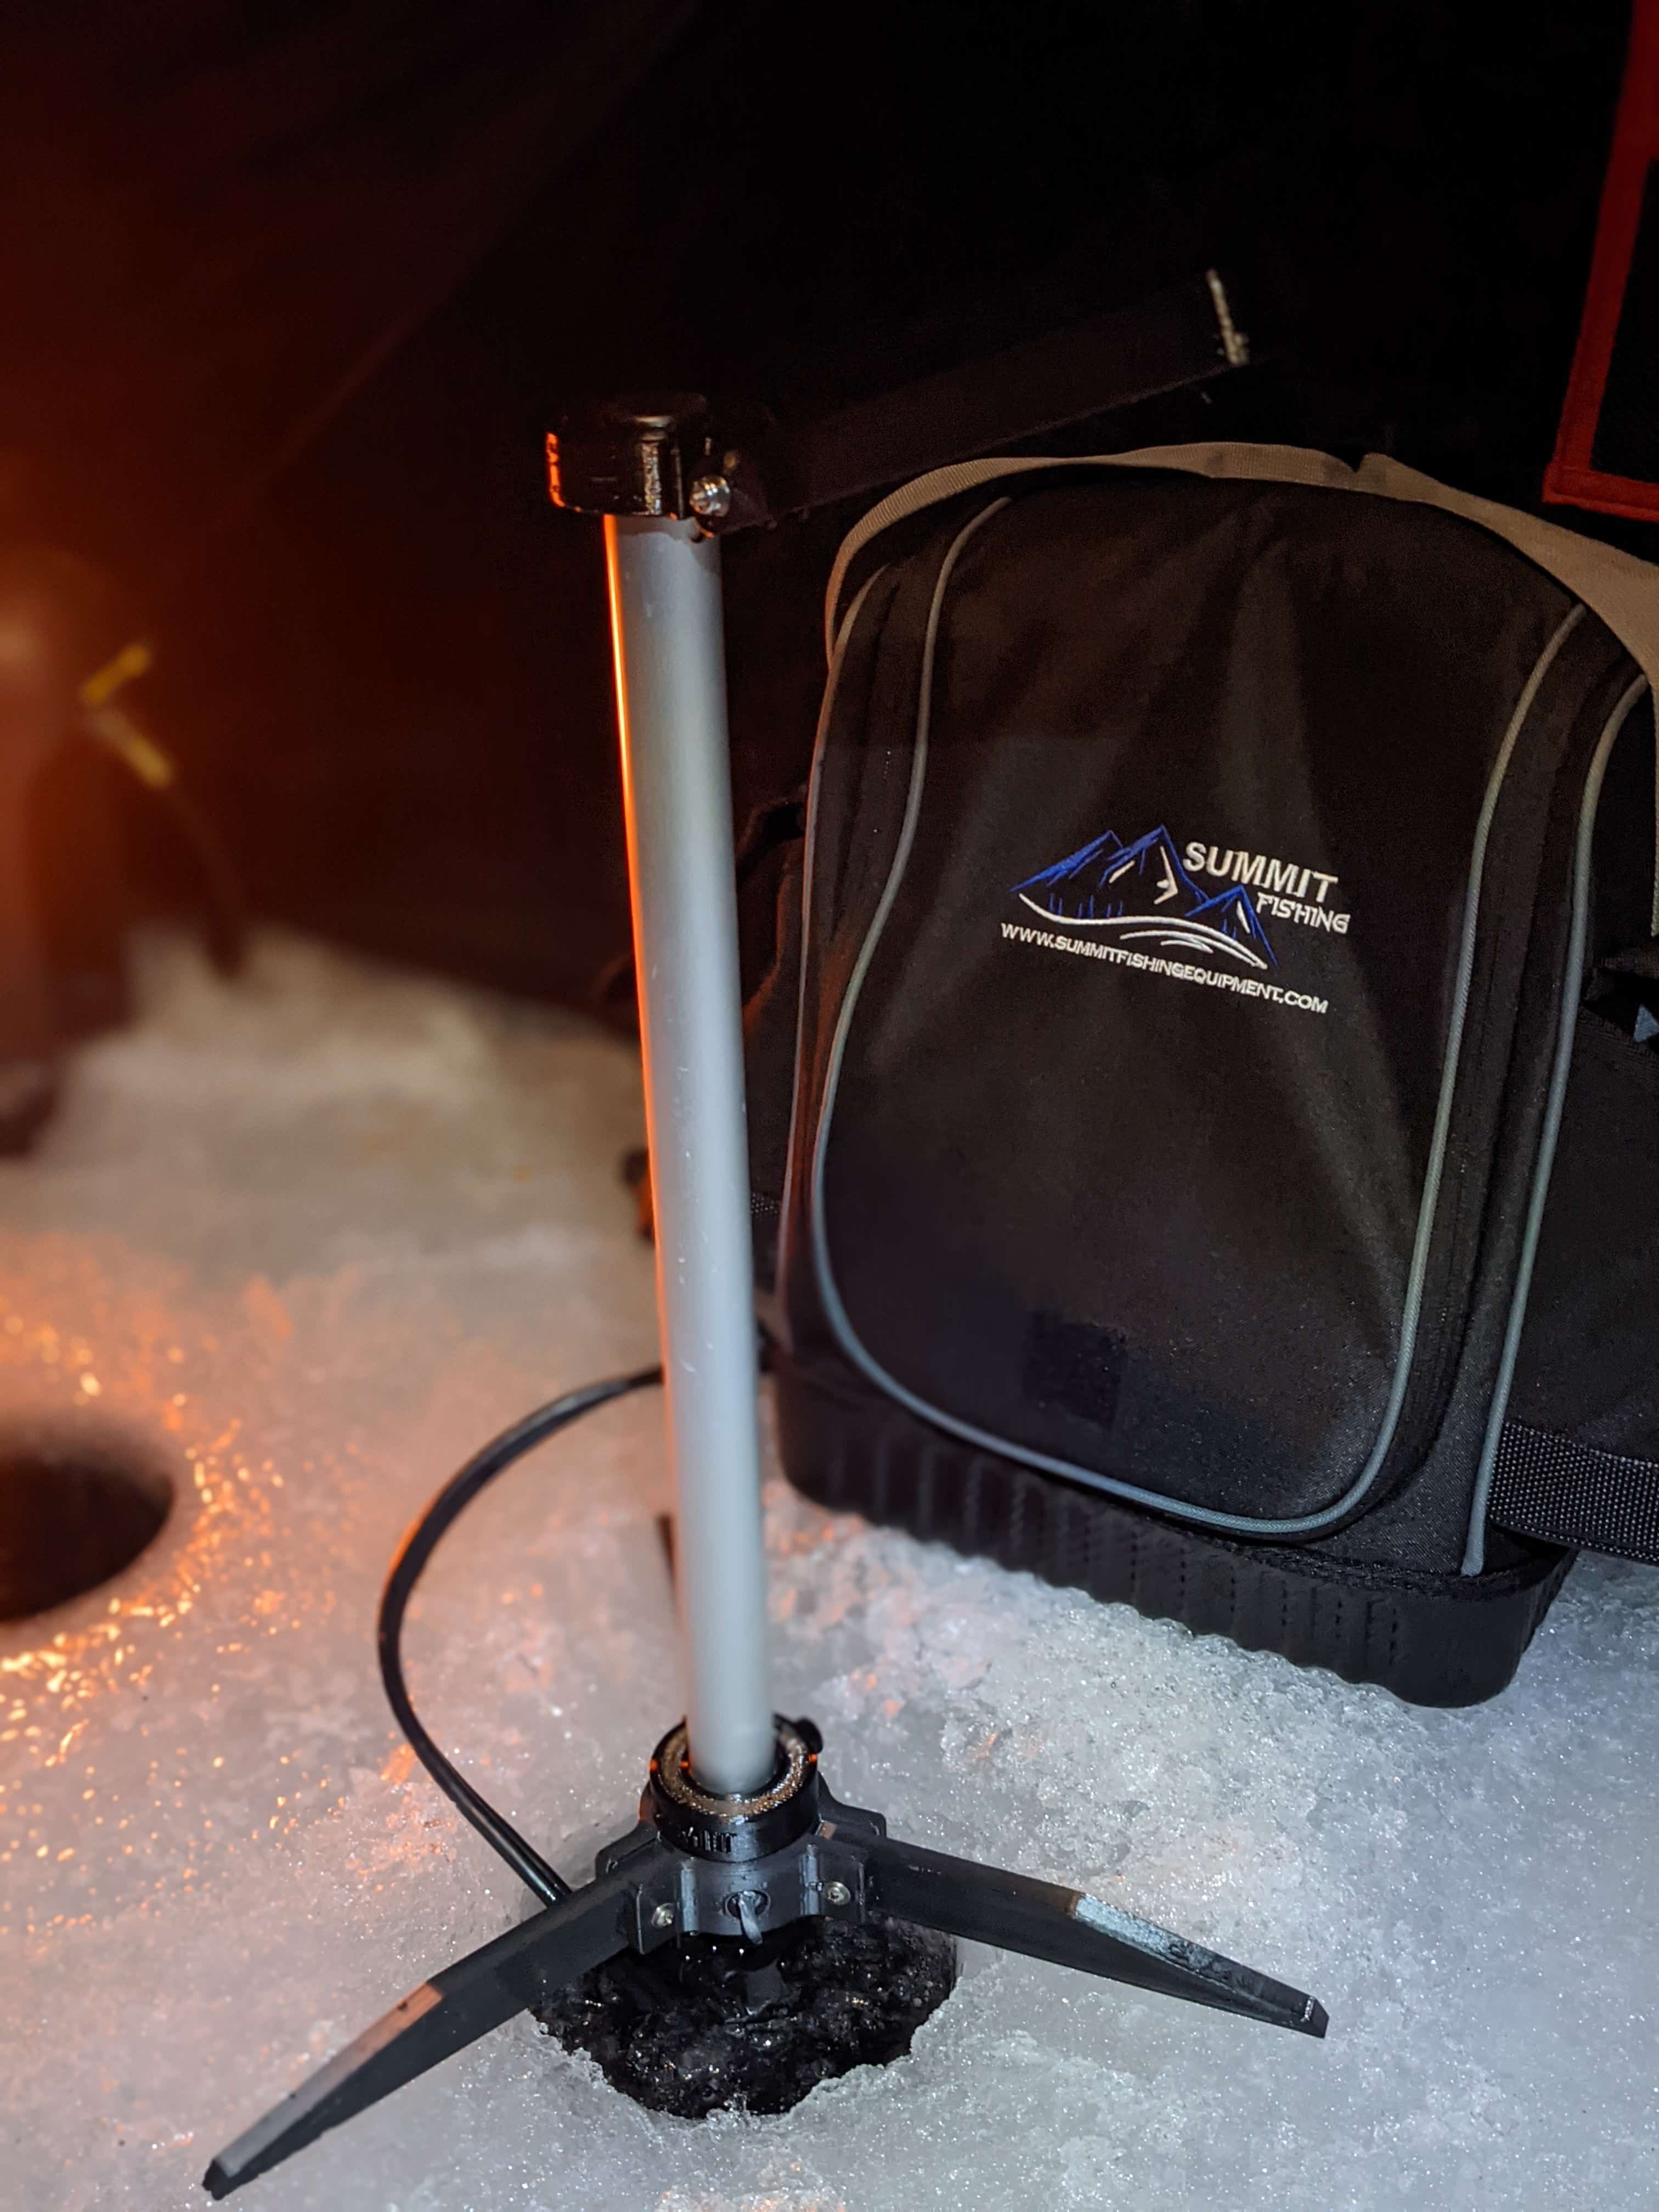 Garmin Livescope Transducer Pole With Quick Disconnect Transducer Moun –  Summit Fishing Equipment